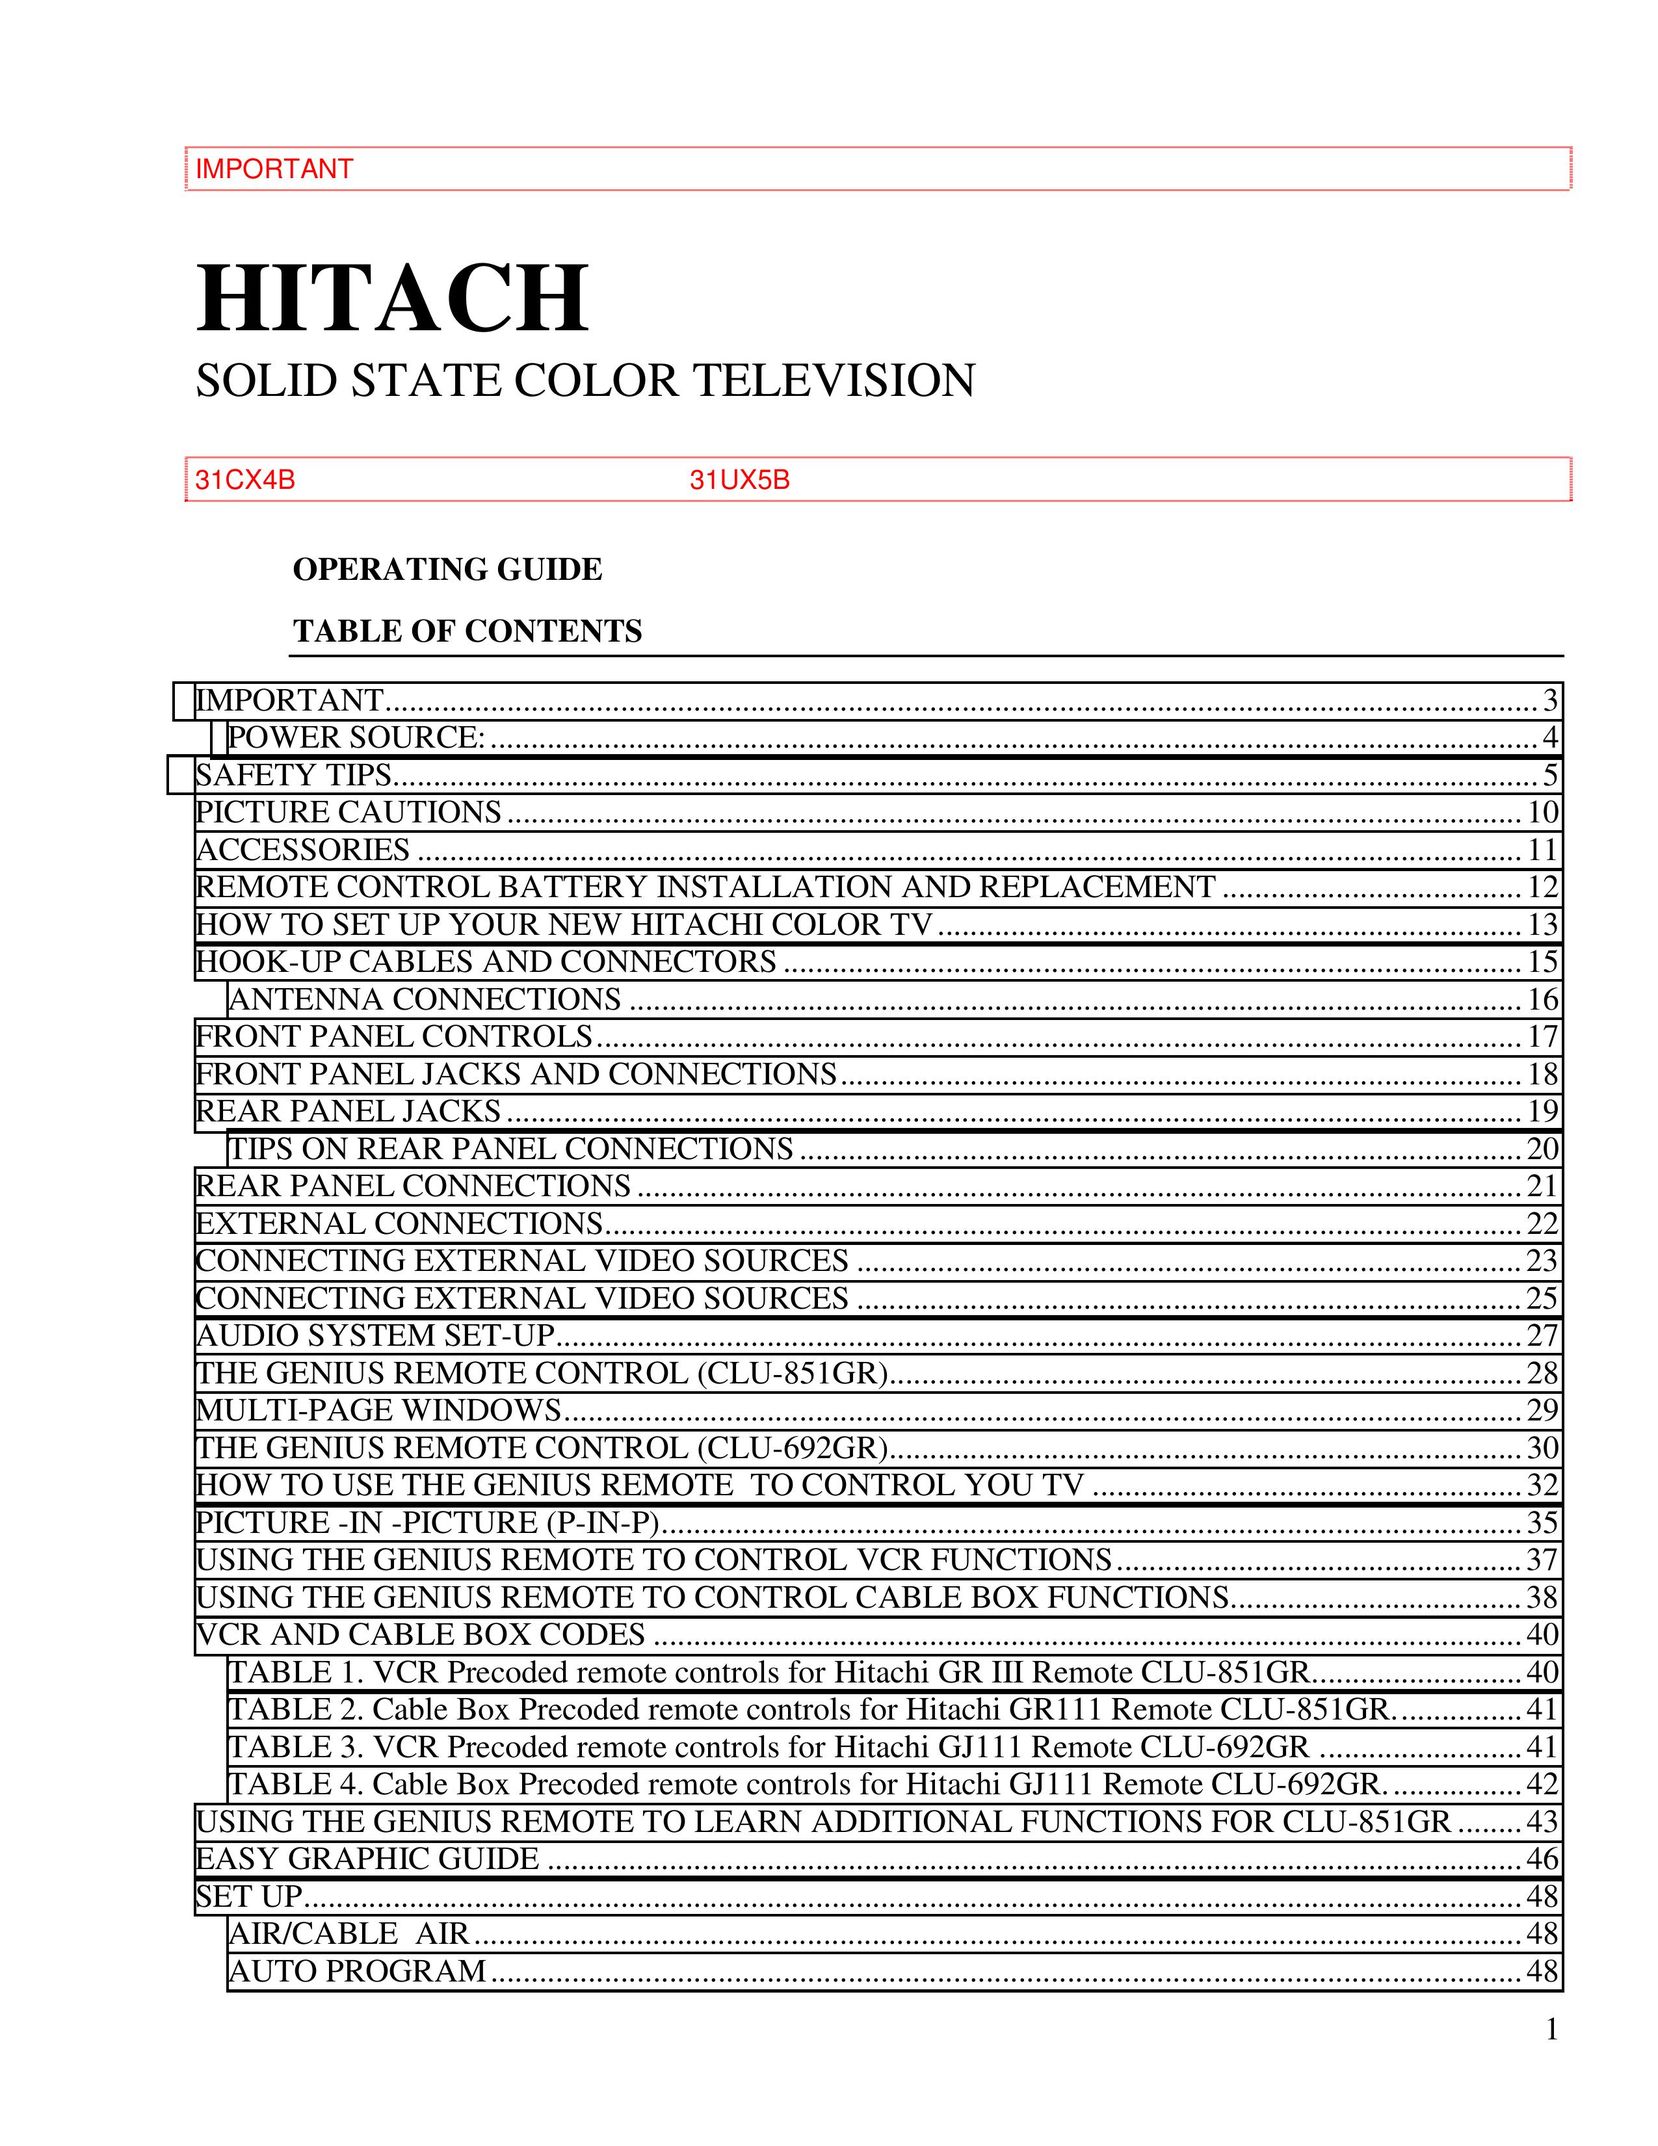 Hitachi 31CX4B, 31UX5B CRT Television User Manual